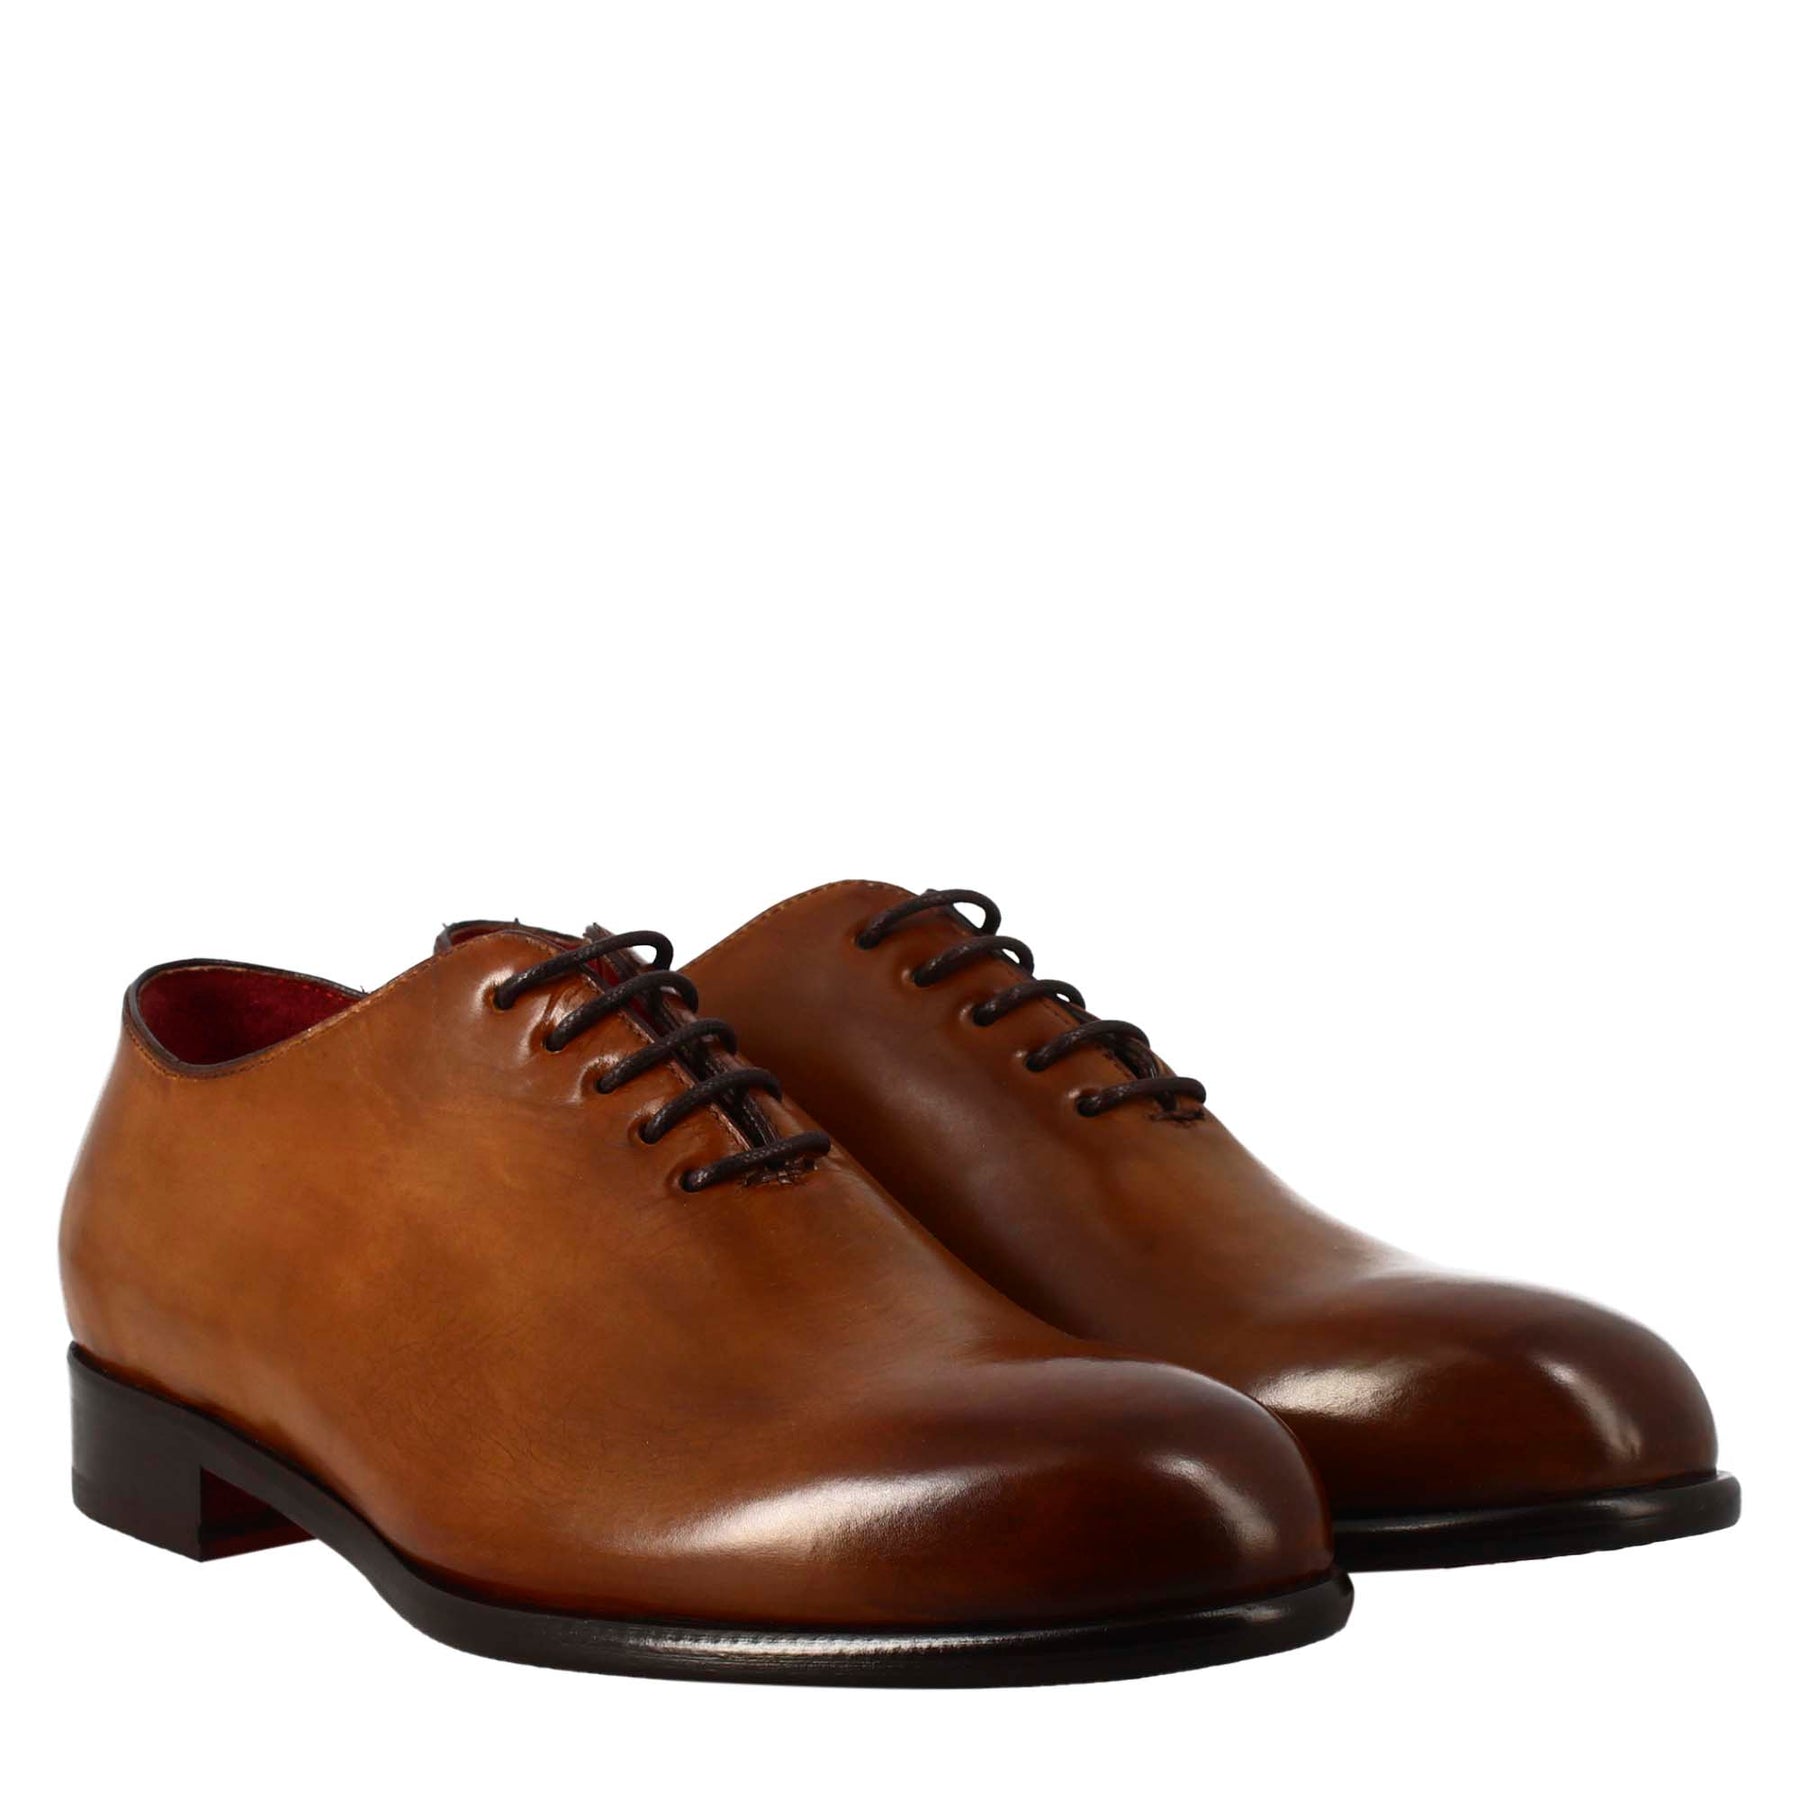 Men's elegant sienna brown wholecut leather oxford